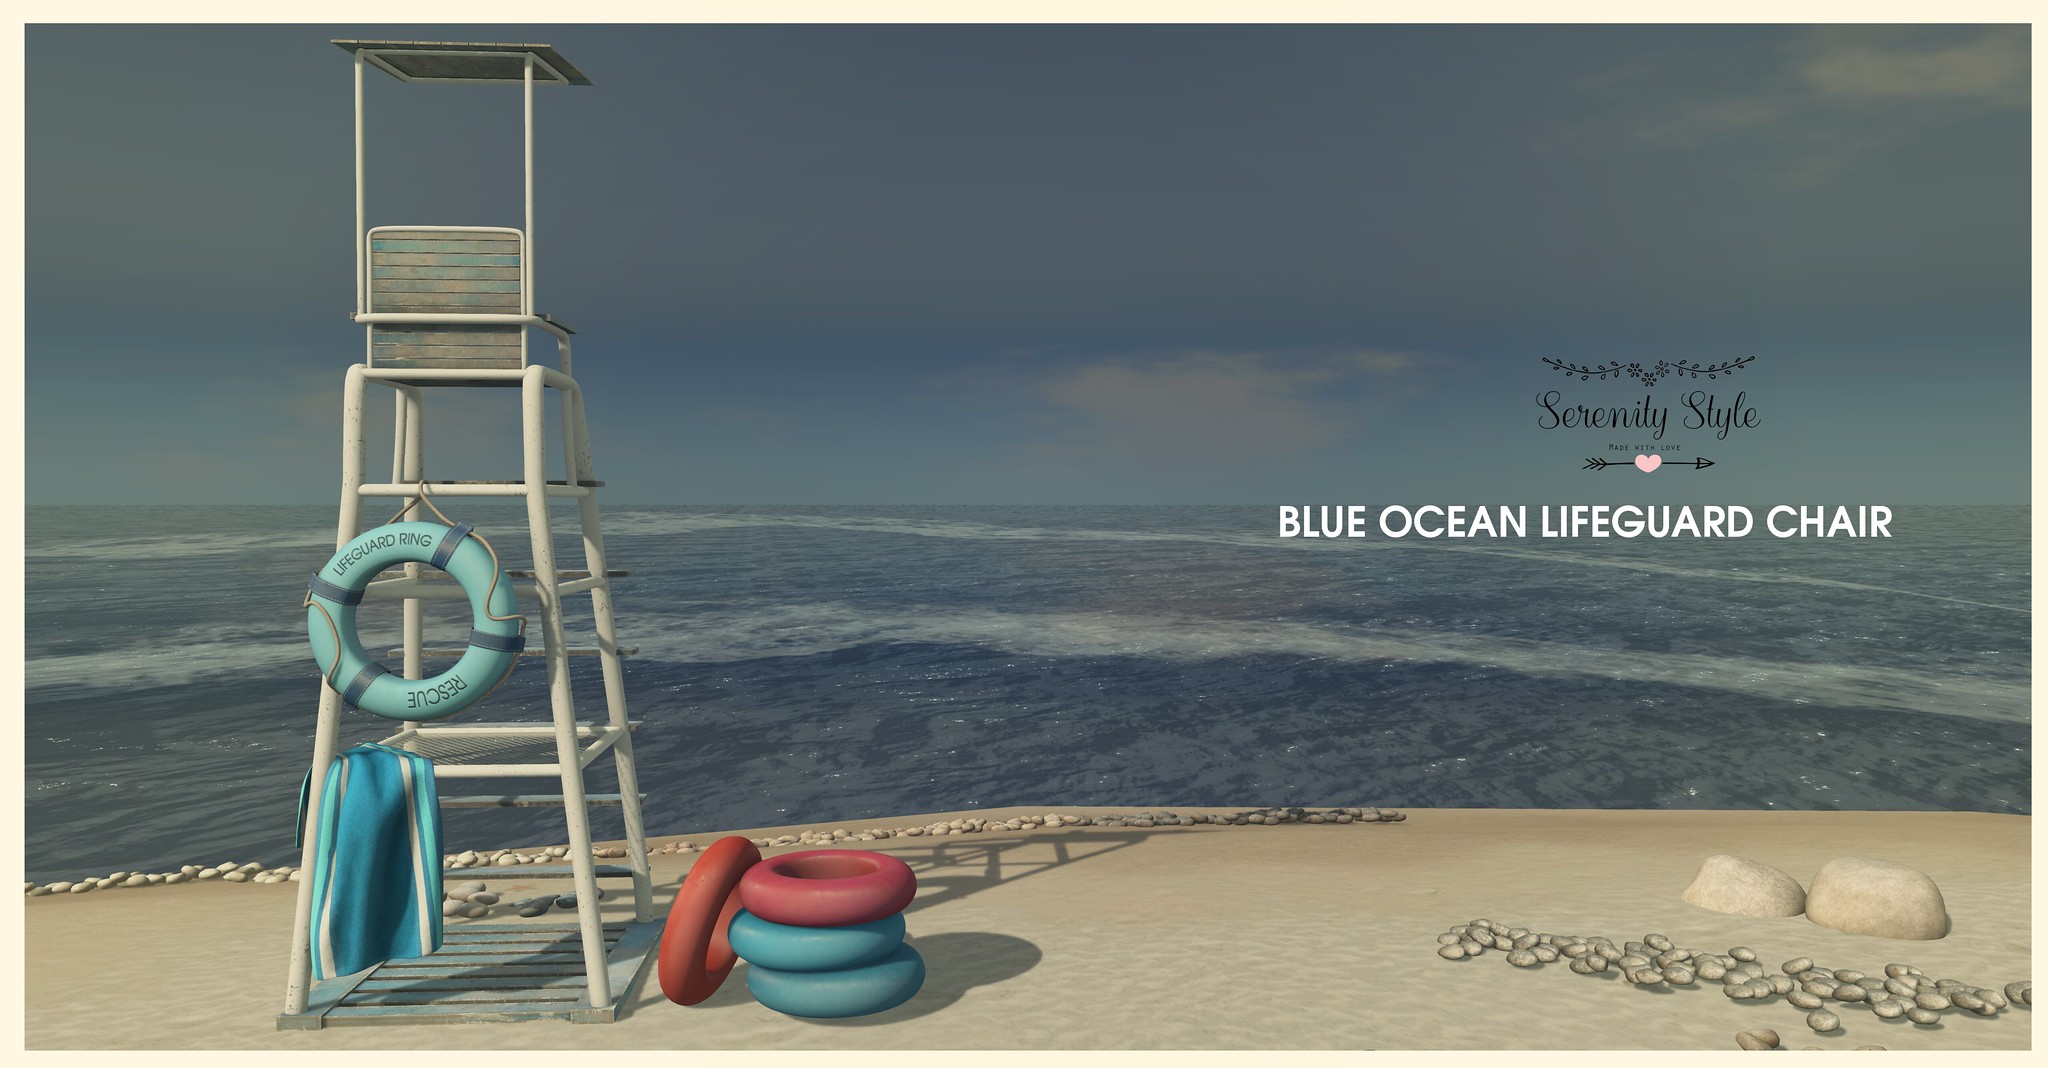 Serenity Style – Blue Ocean Lifeguard Chair